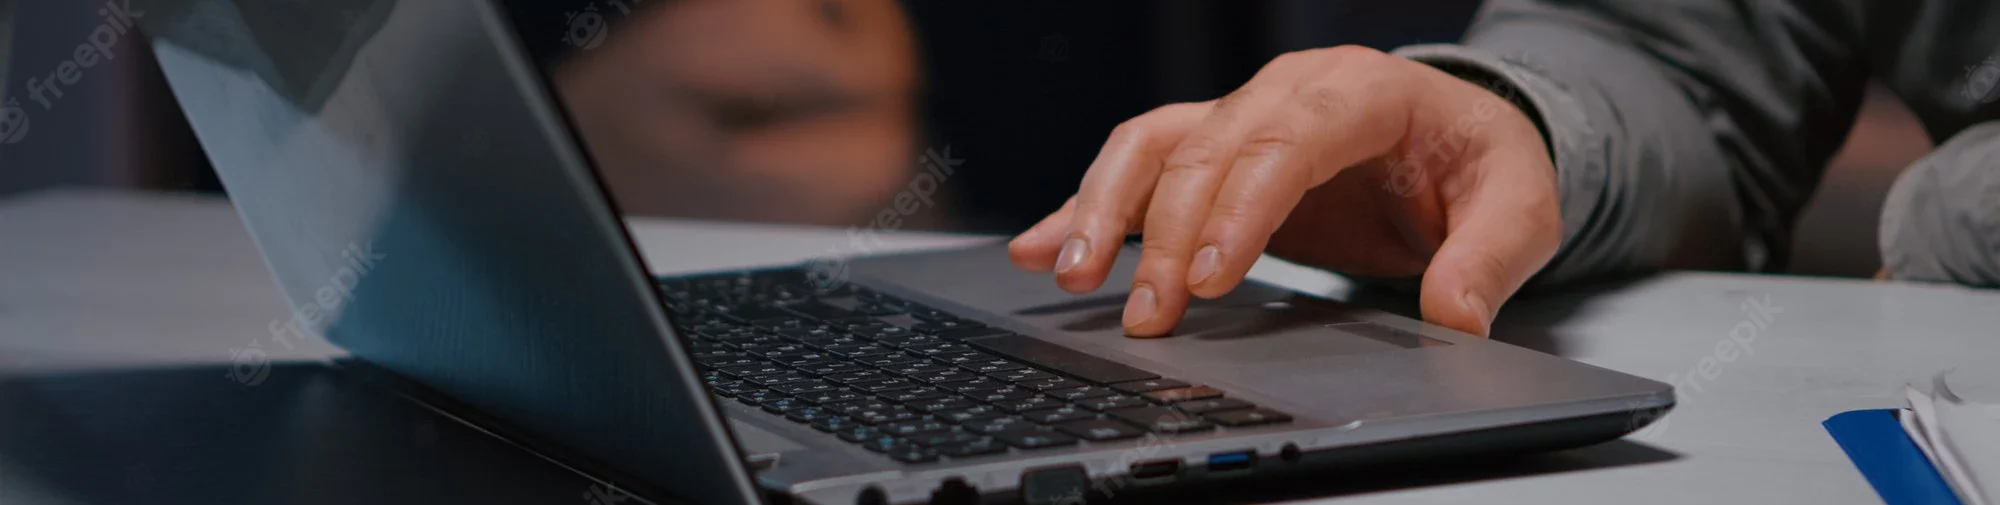 Hand on laptop keyboard, typing.